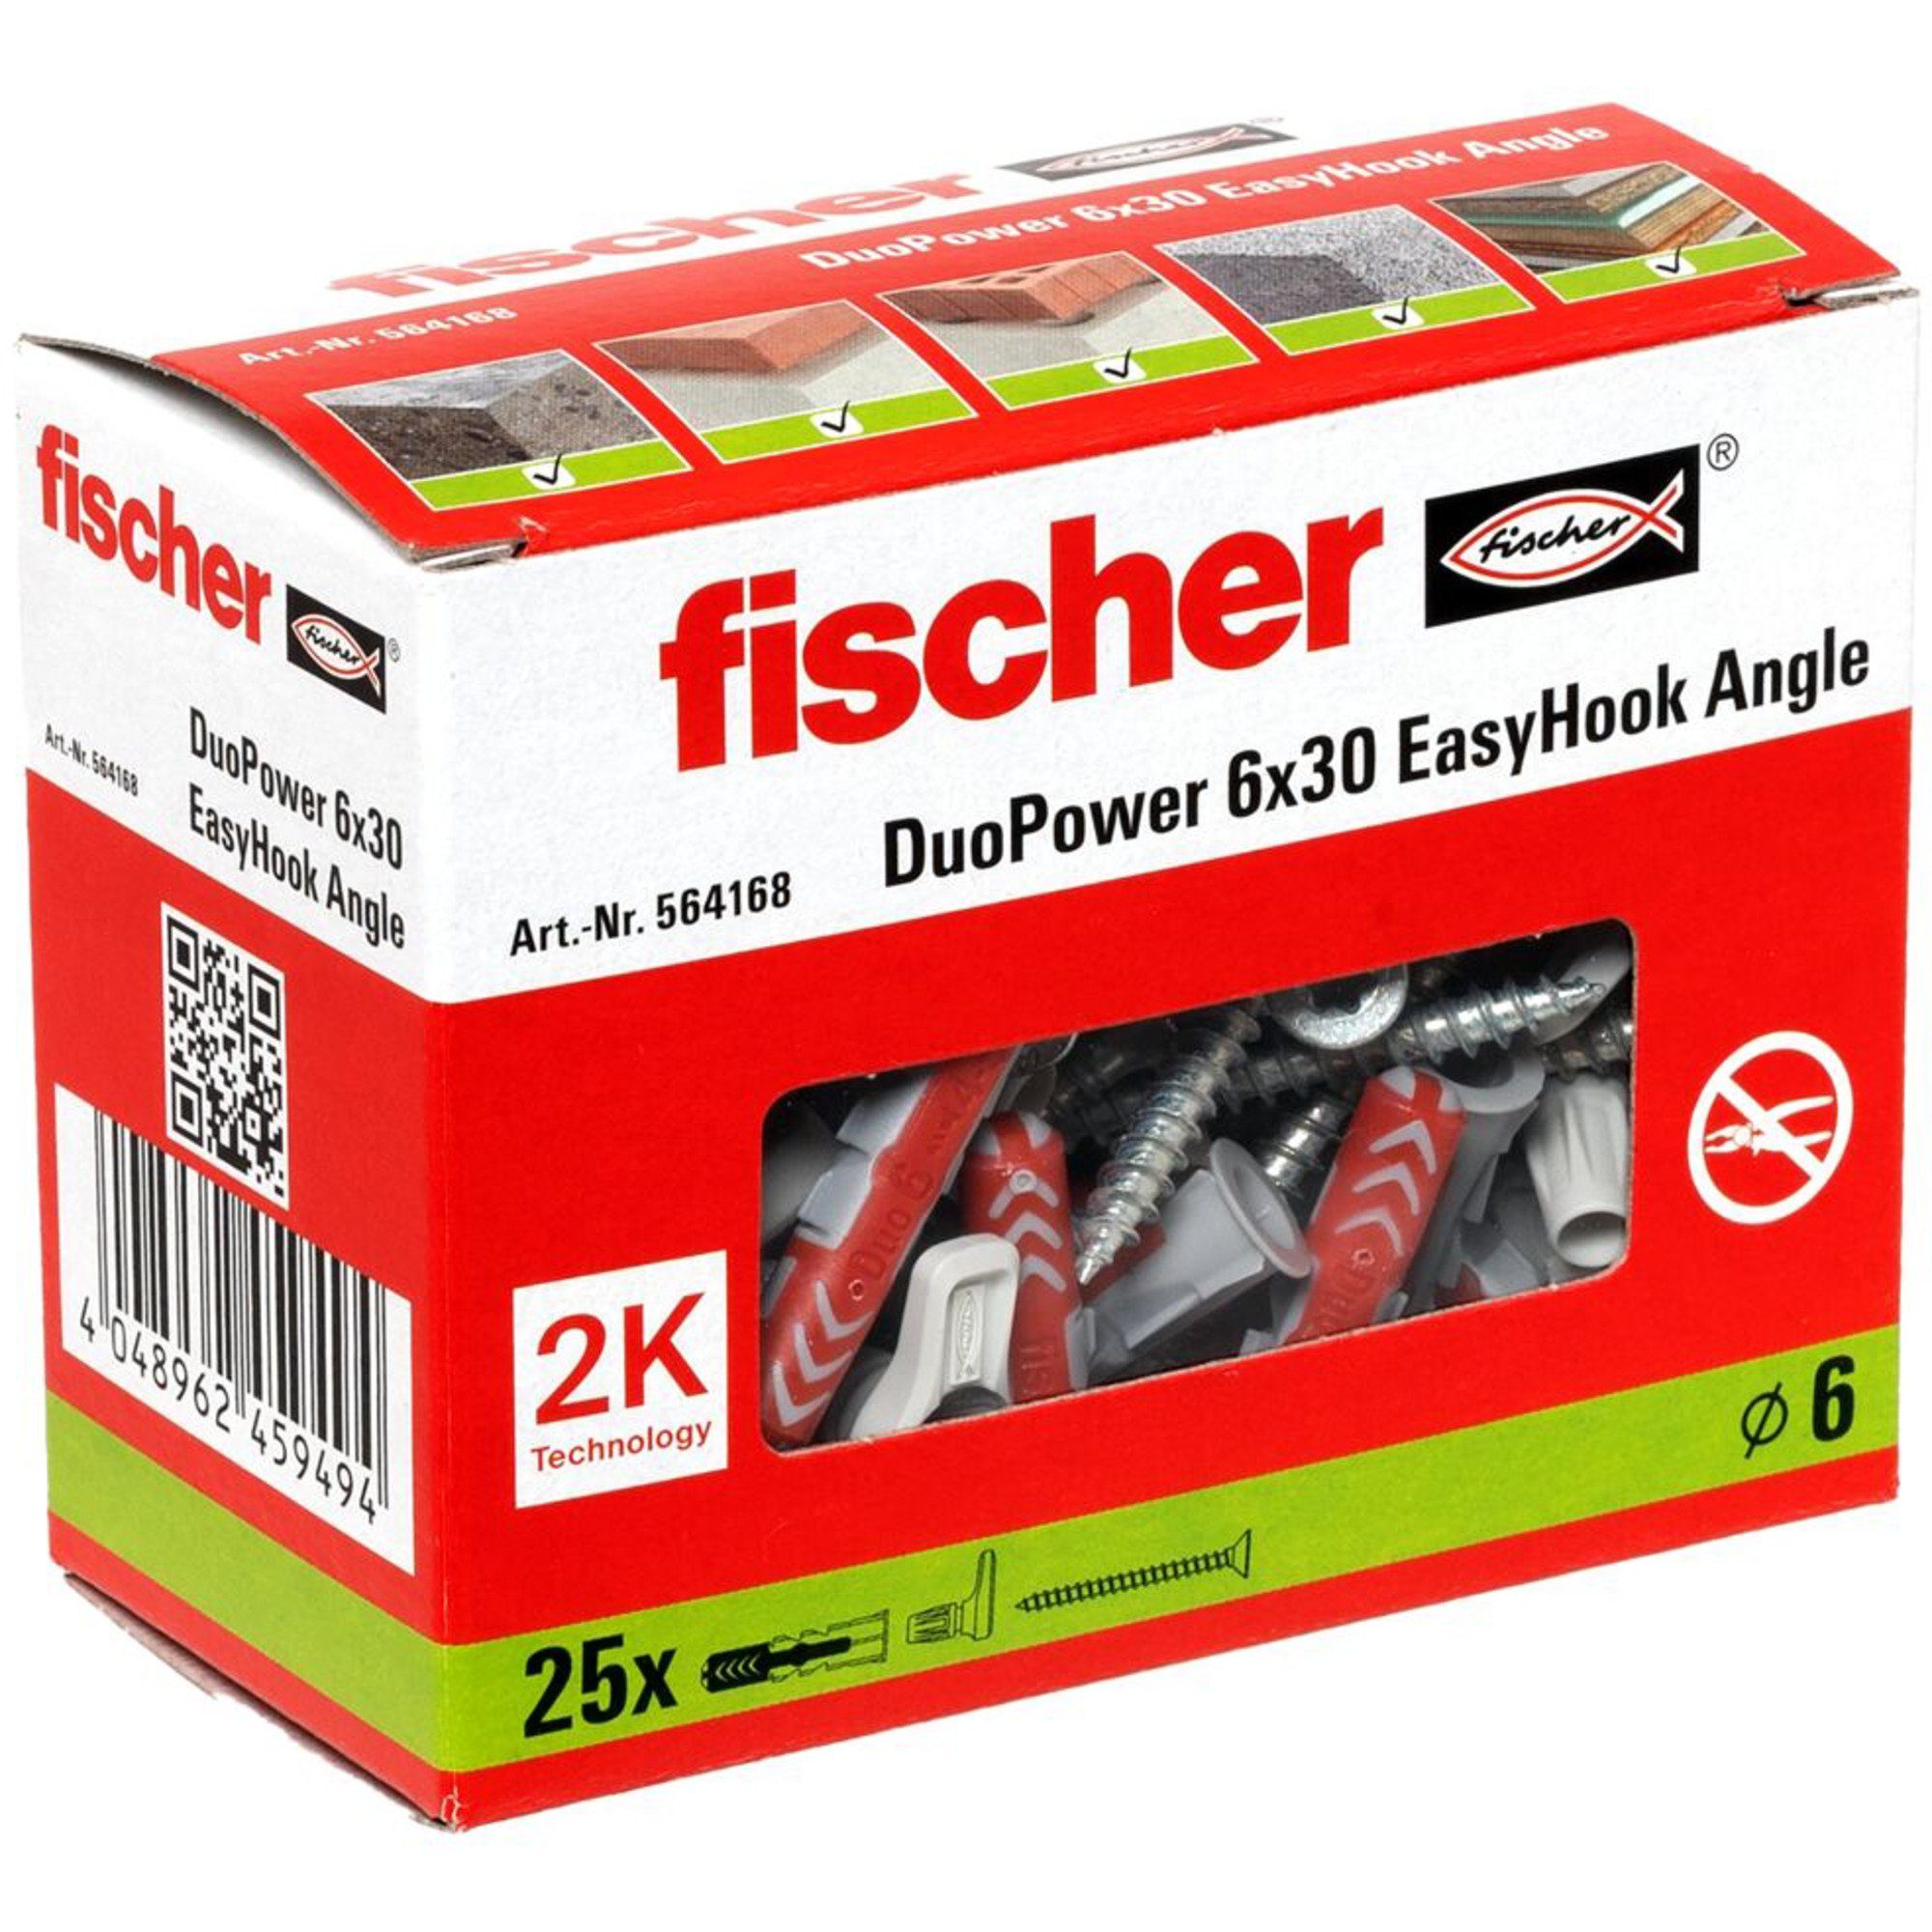 Fischer Universaldübel fischer EasyHook Angle DuoPower 6x30, Dübel, (25